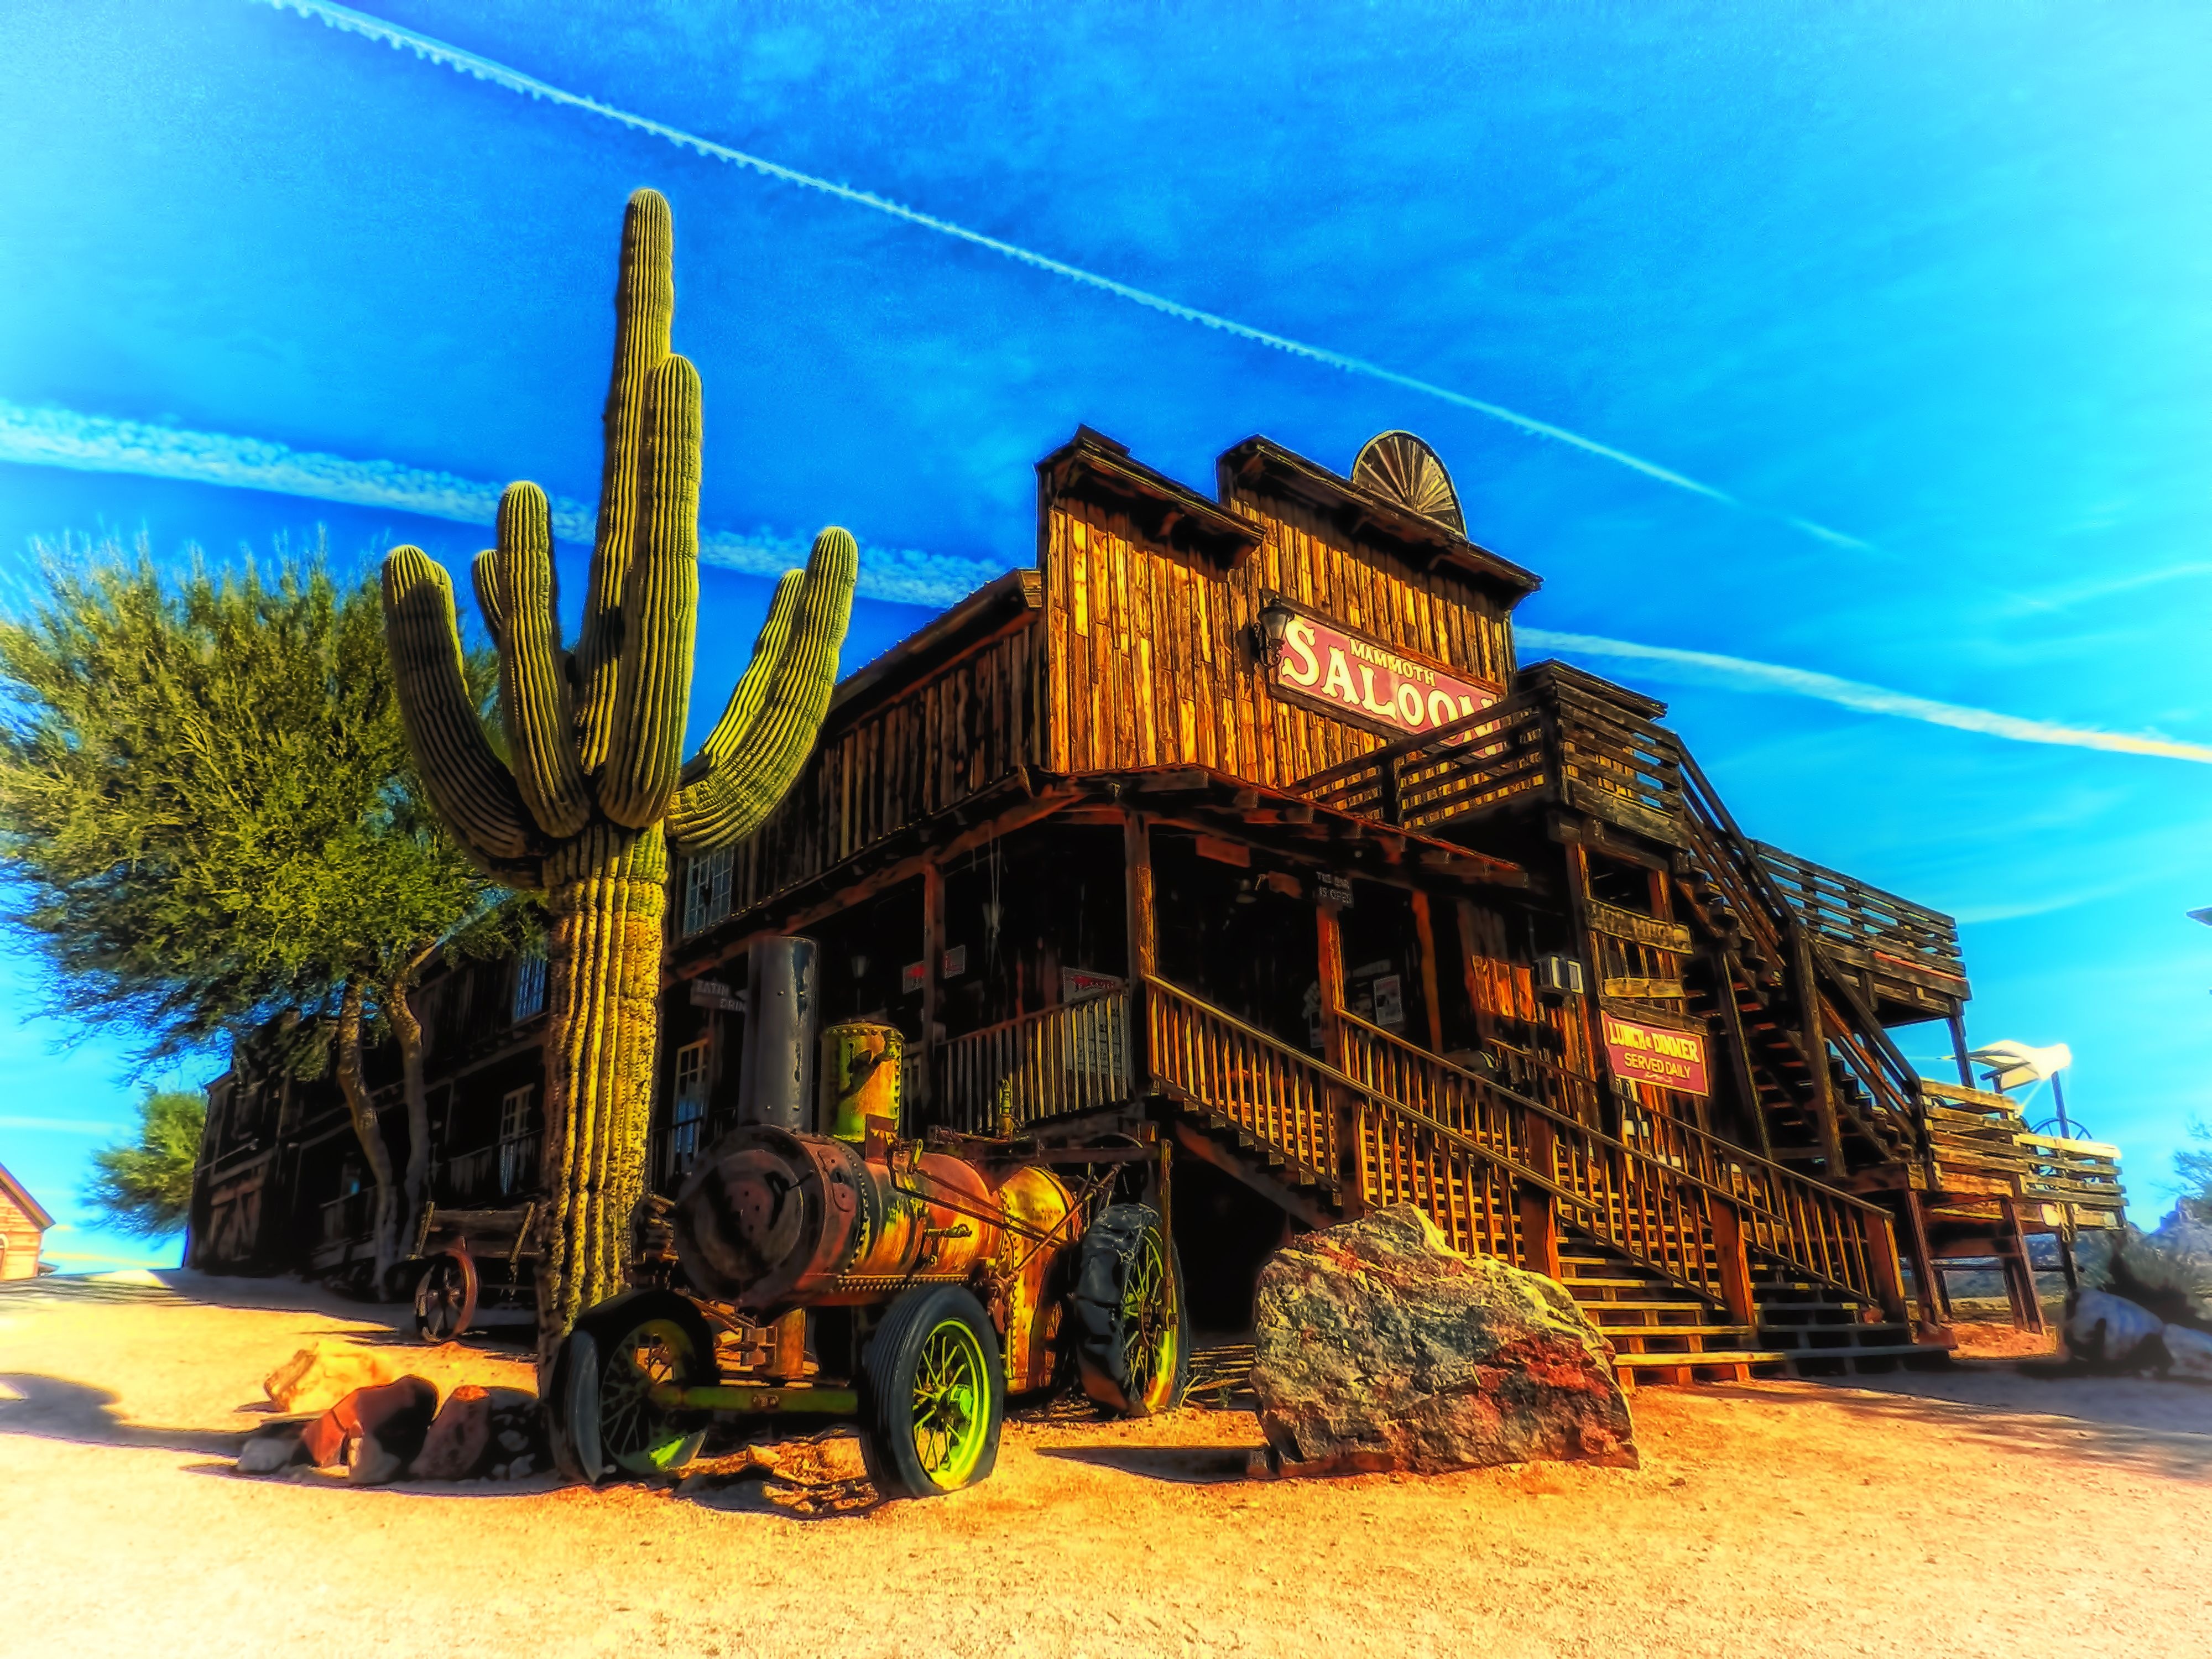 Arizona Saloon Cactus Landscape Western HDr F Wallpaper